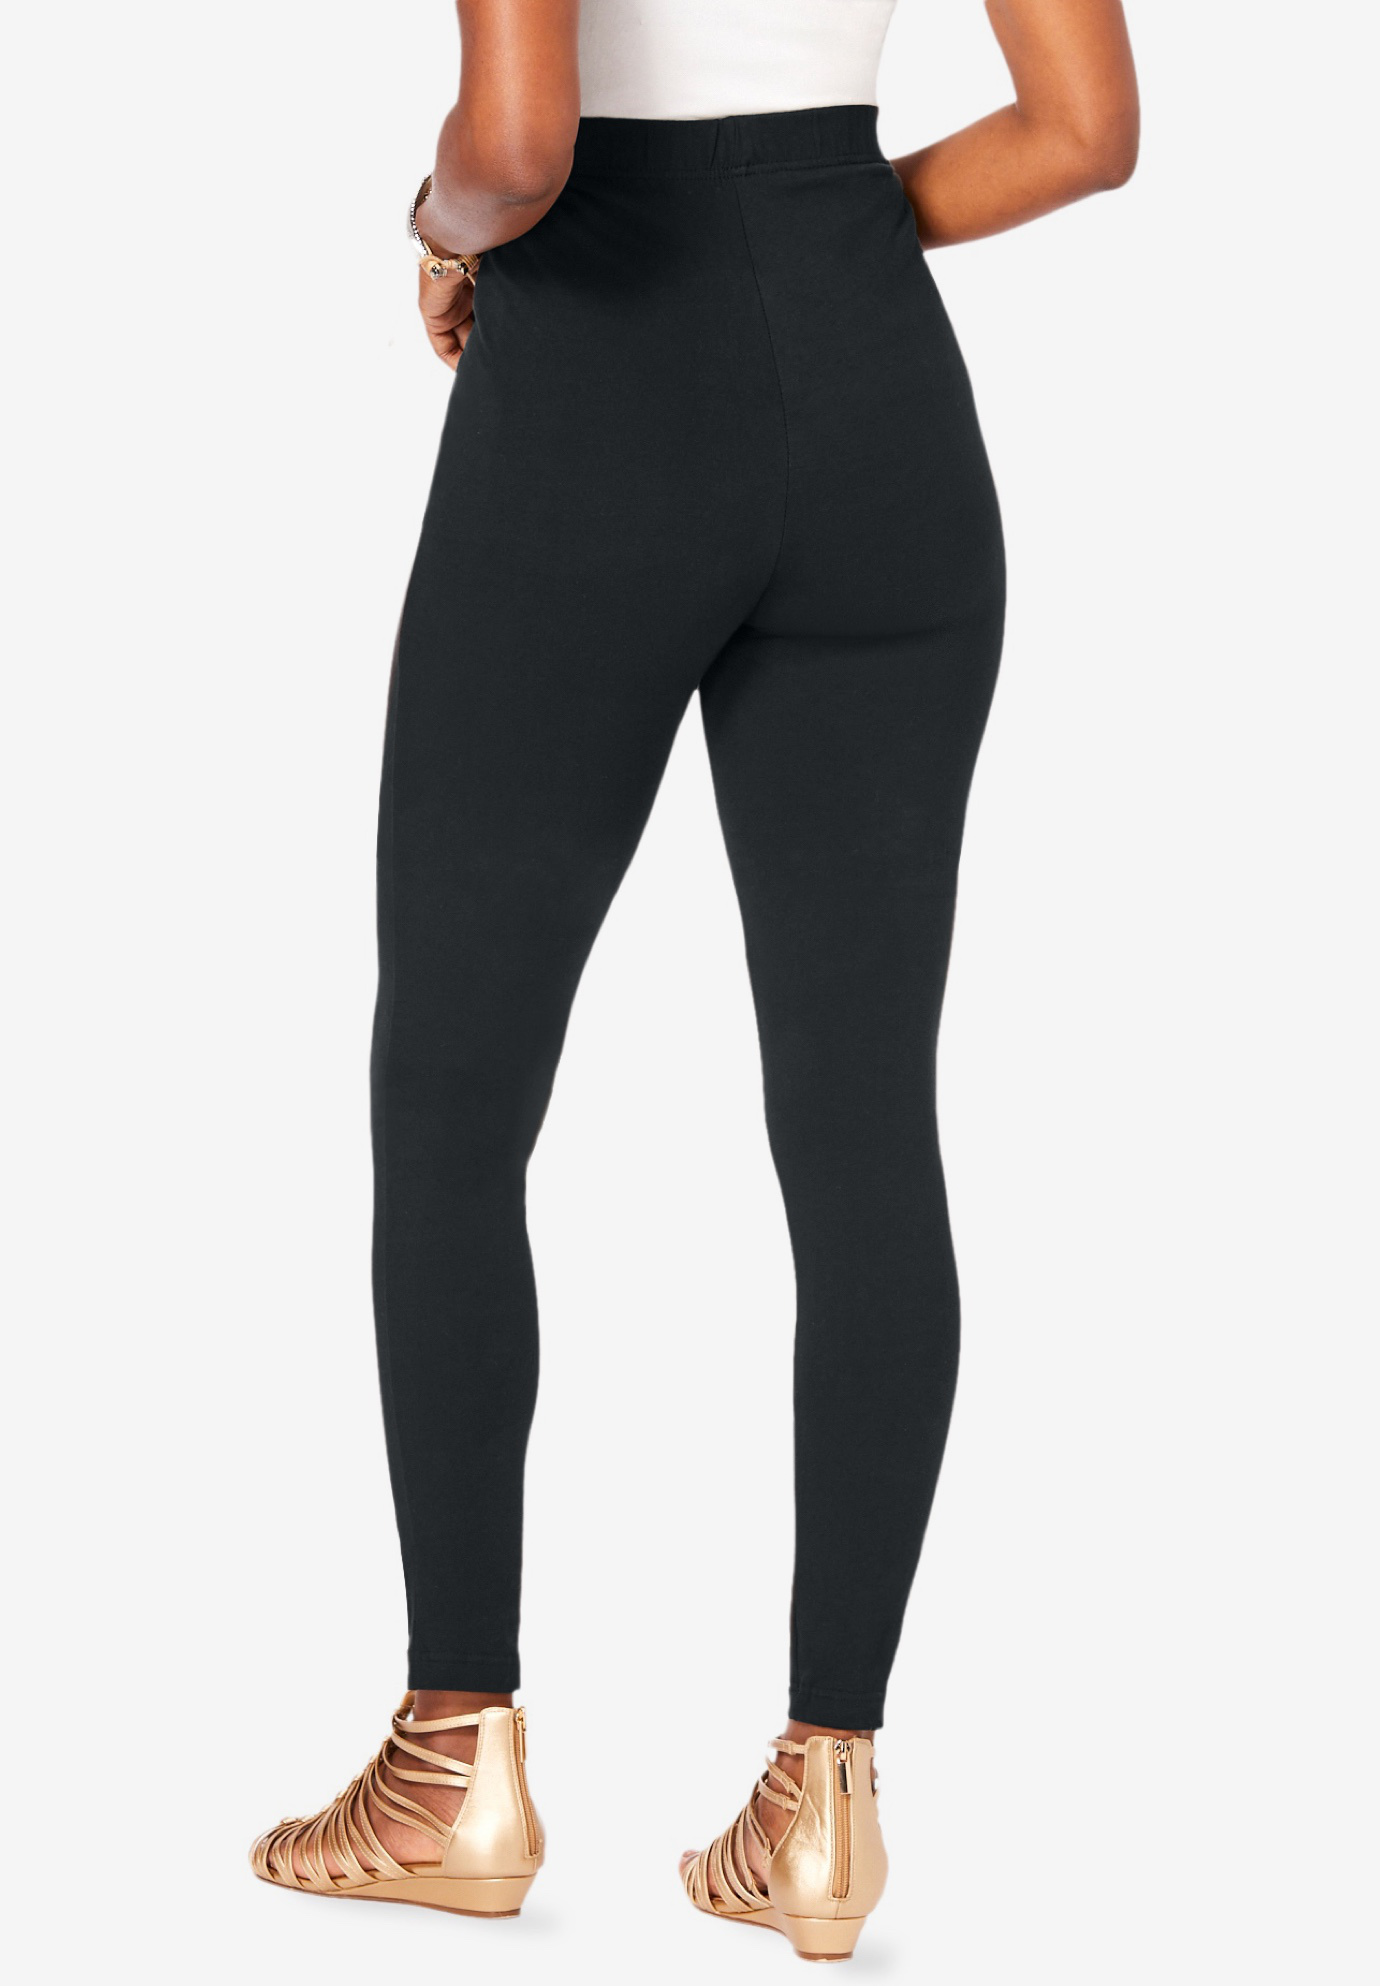 Roaman's Women's Plus Size Petite Ankle-Length Essential Stretch Legging Activewear Workout Yoga Pants - image 4 of 6